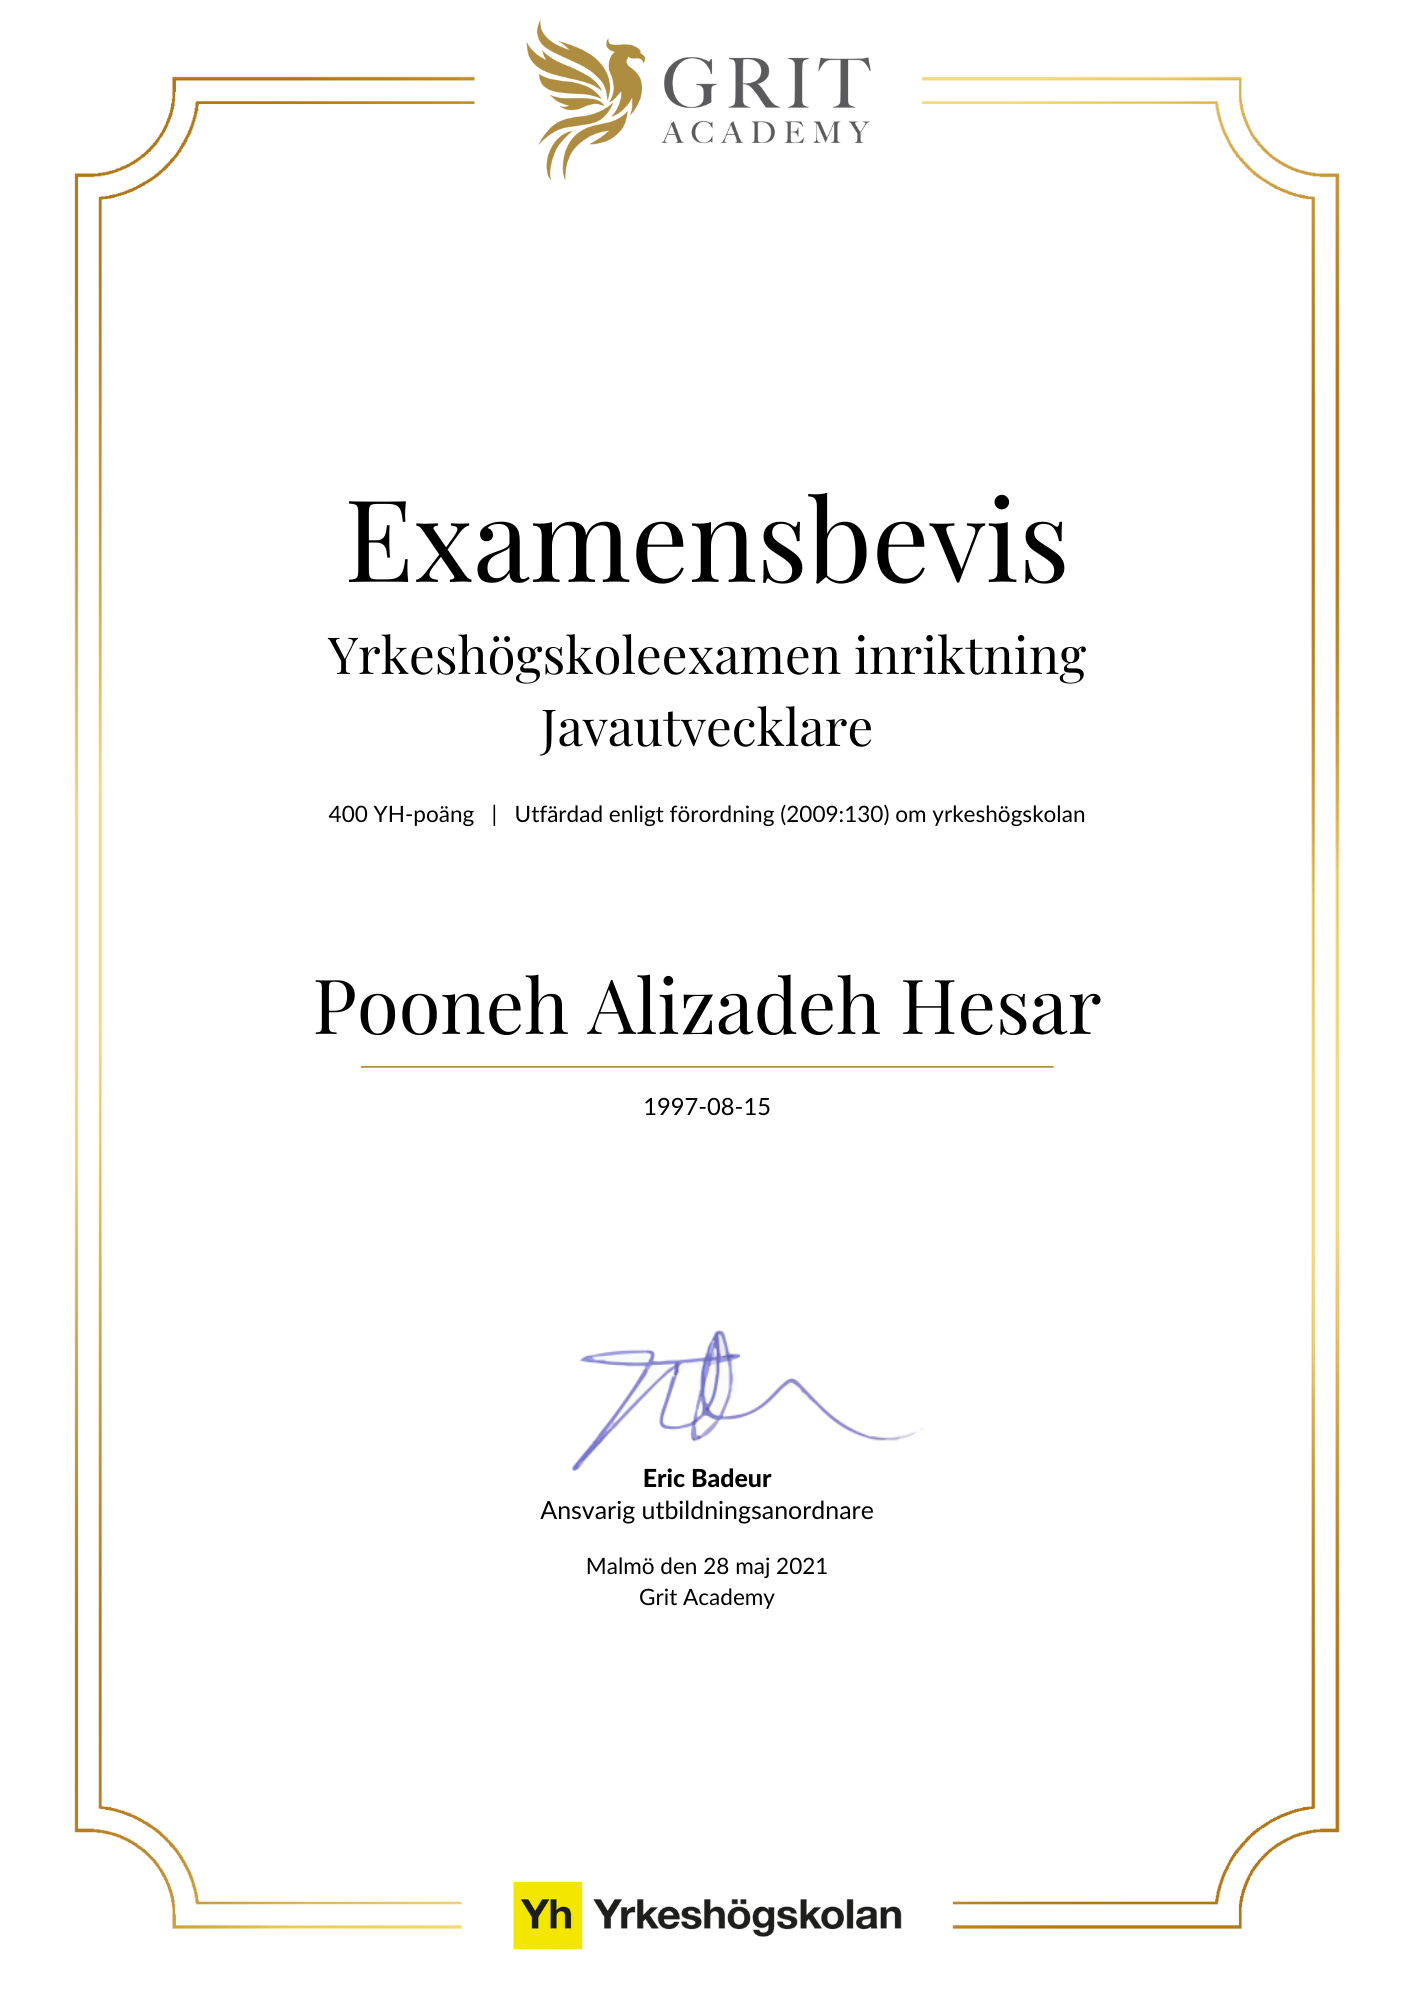 Examensbevis Pooneh Alizadeh Hesar - 1